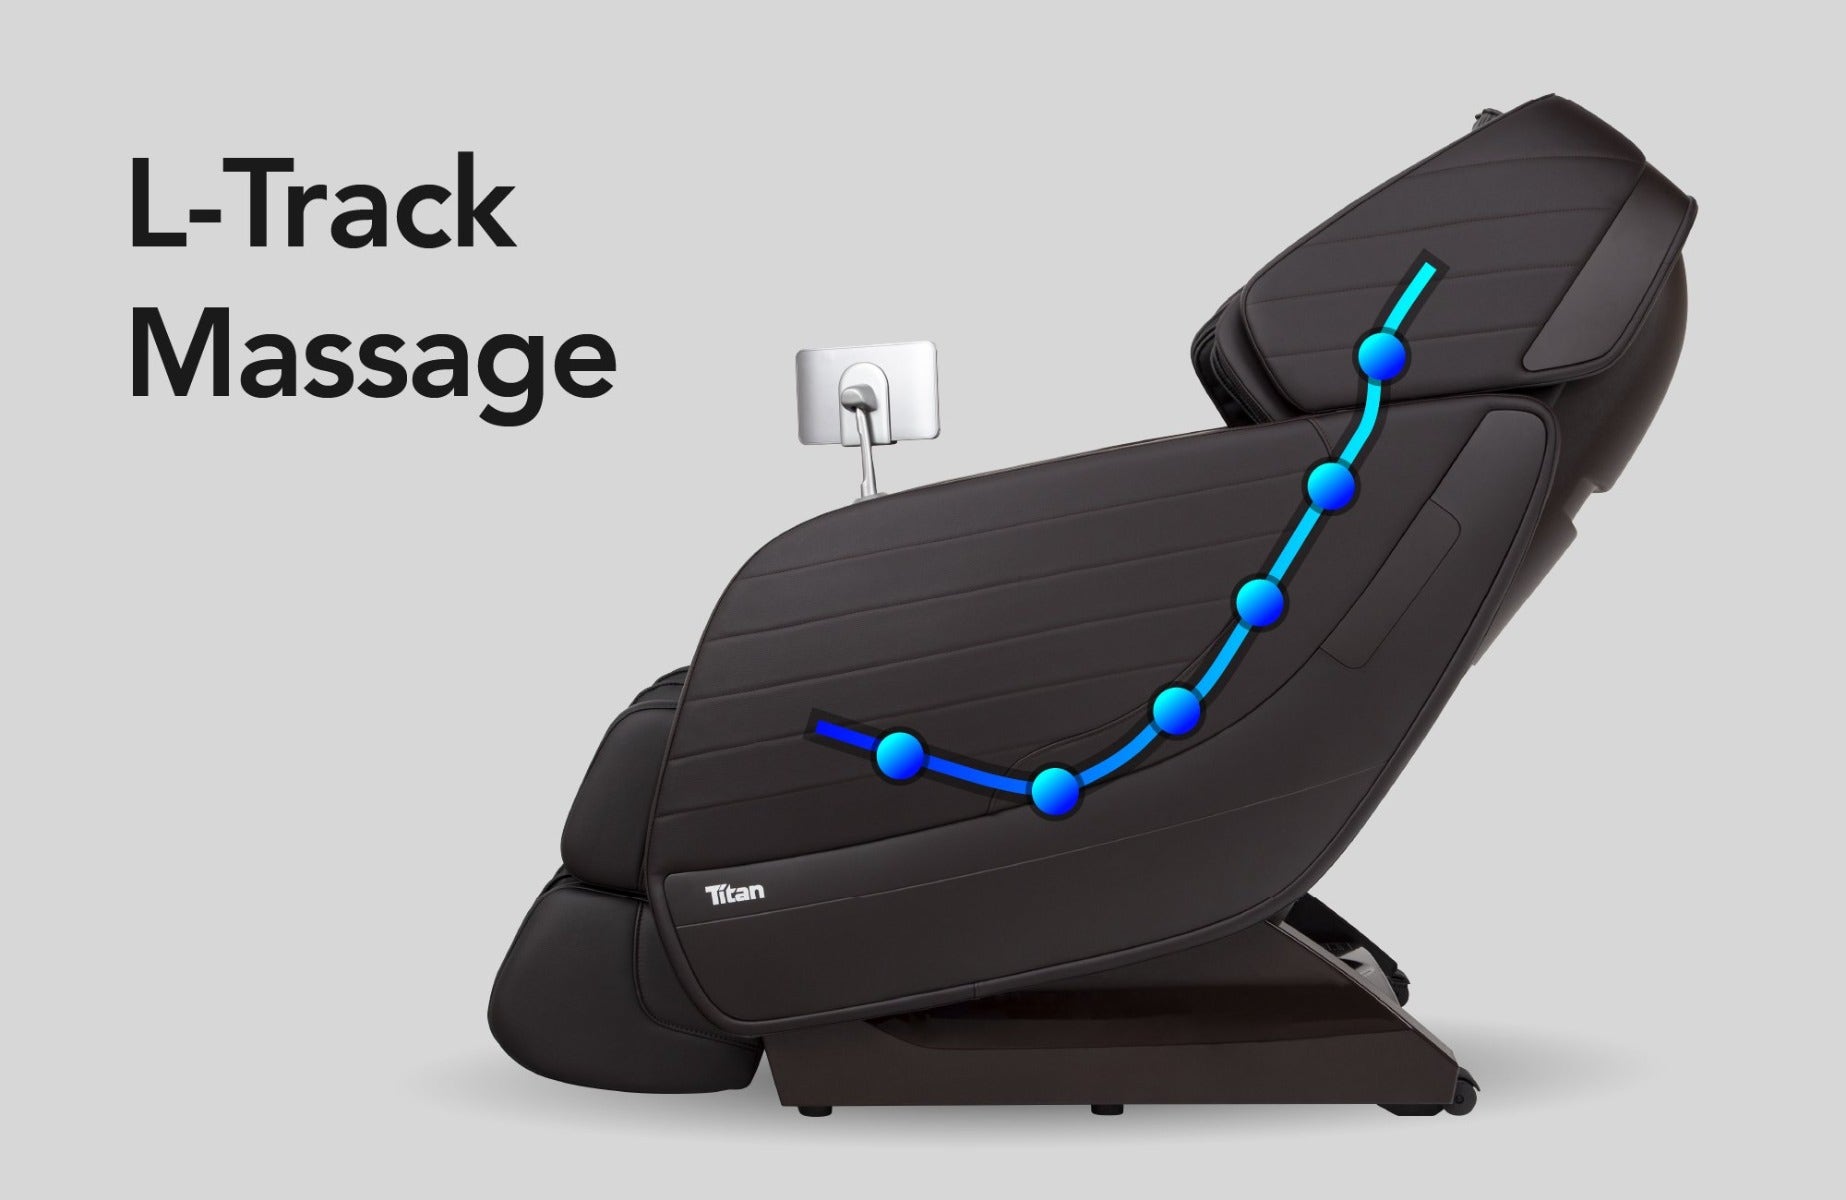 titan jupiter le premium l-track massage chair